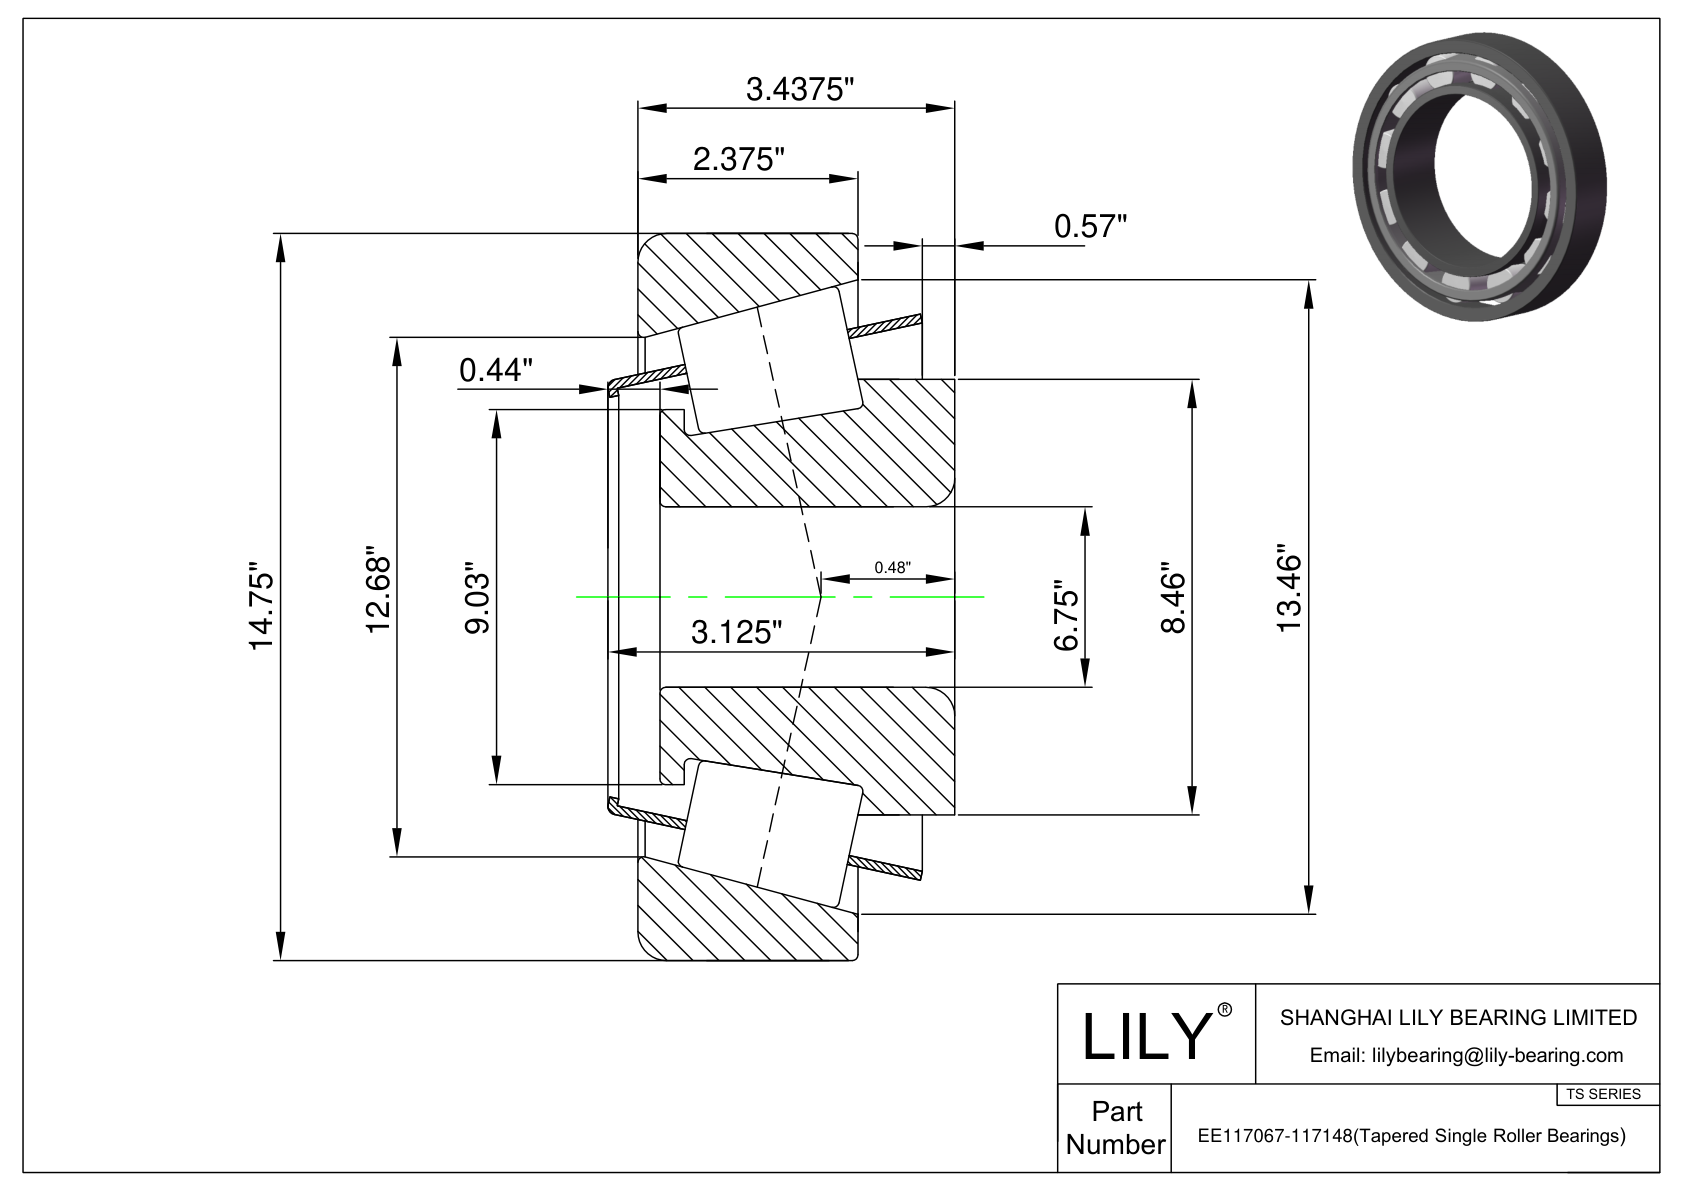 EE117067-117148 TS系列(圆锥单滚子轴承)(英制) CAD图形